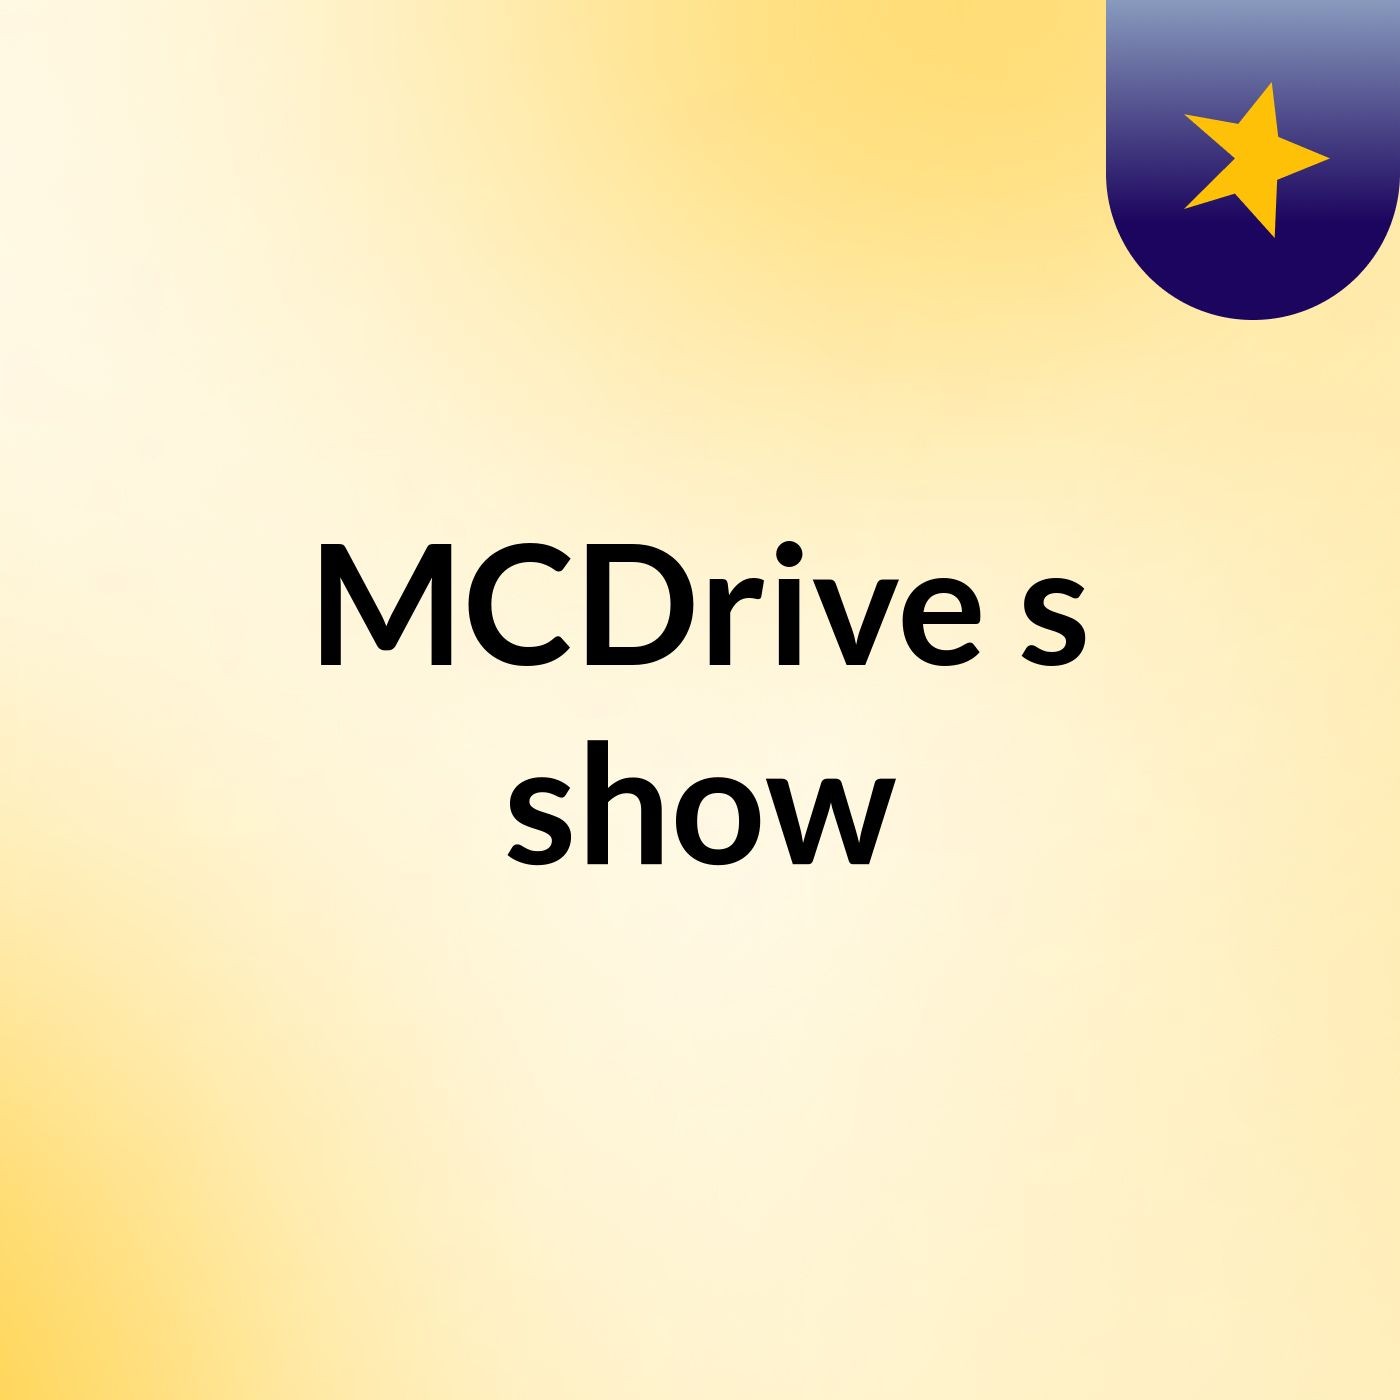 MCDrive's show